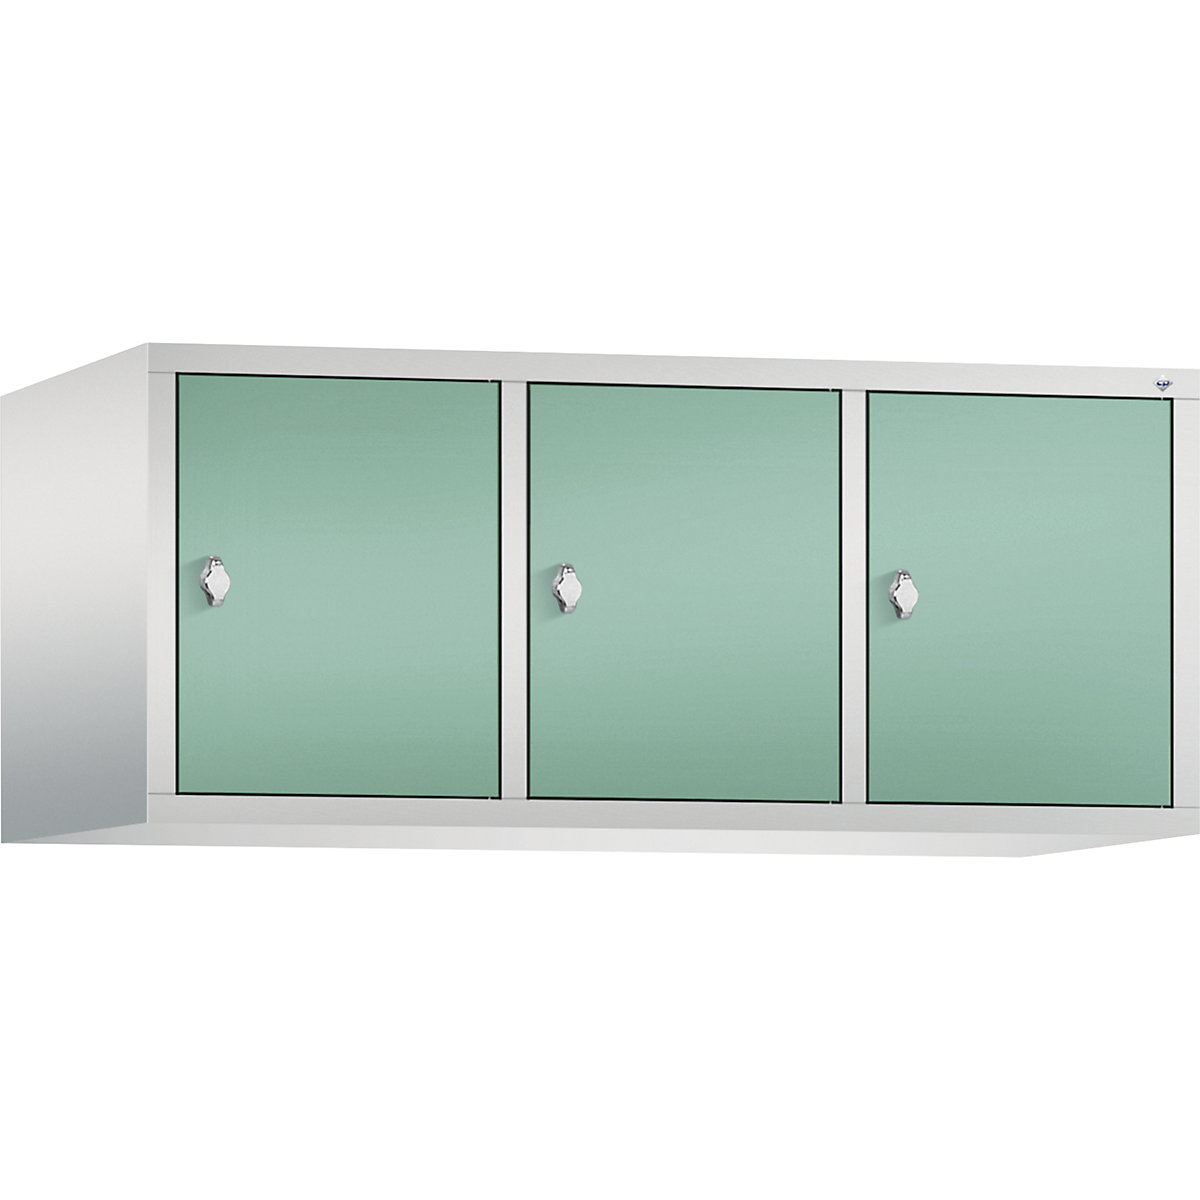 C+P – Altillo CLASSIC, 3 compartimentos, anchura de compartimento 400 mm, gris luminoso / verde luminoso